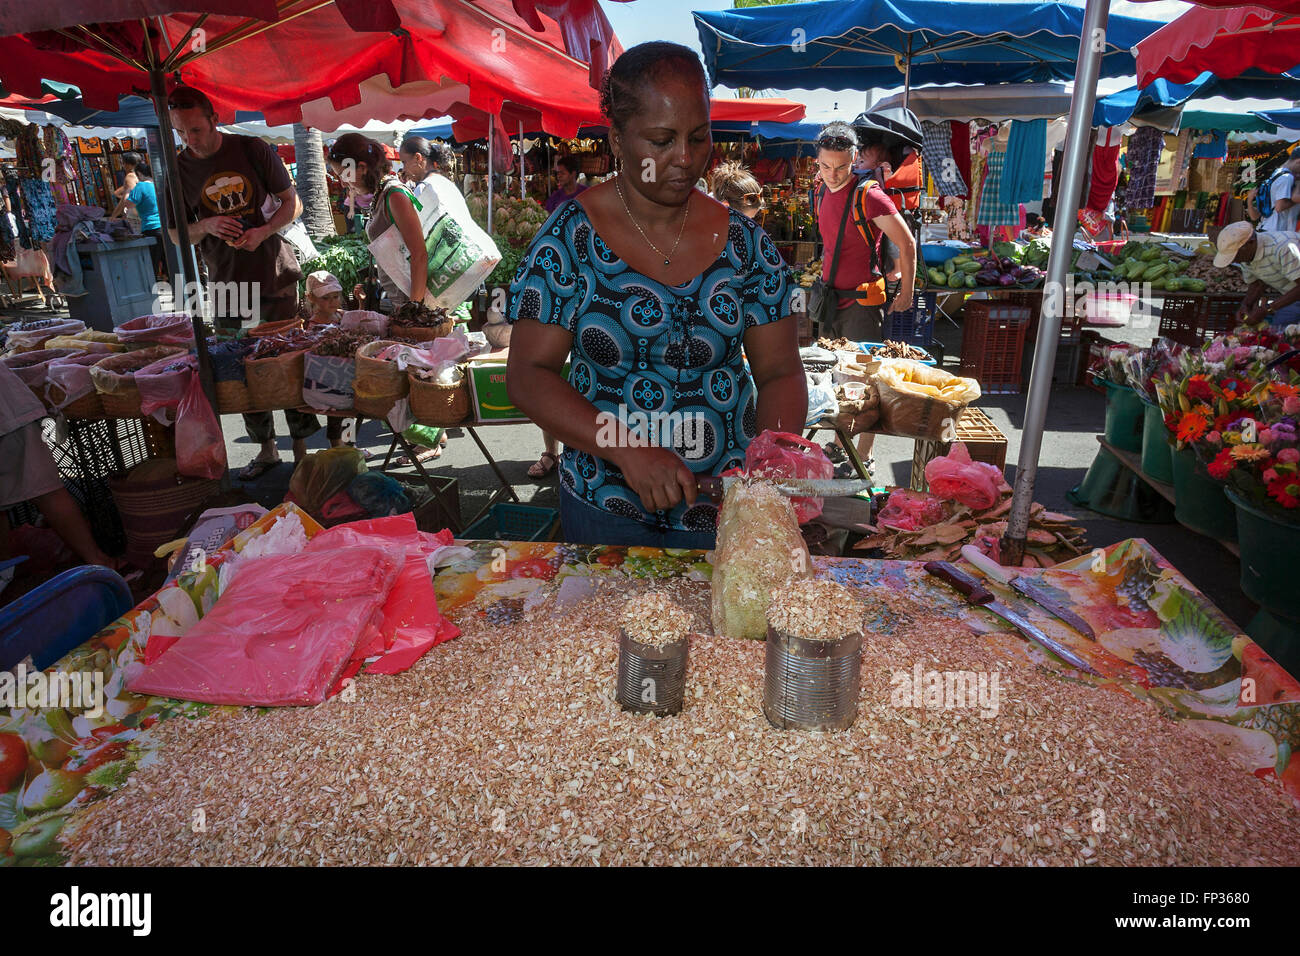 Local woman selling grated breadfruit (Artocarpus altilis), stalls, street markets, Saint Paul, Reunion Stock Photo